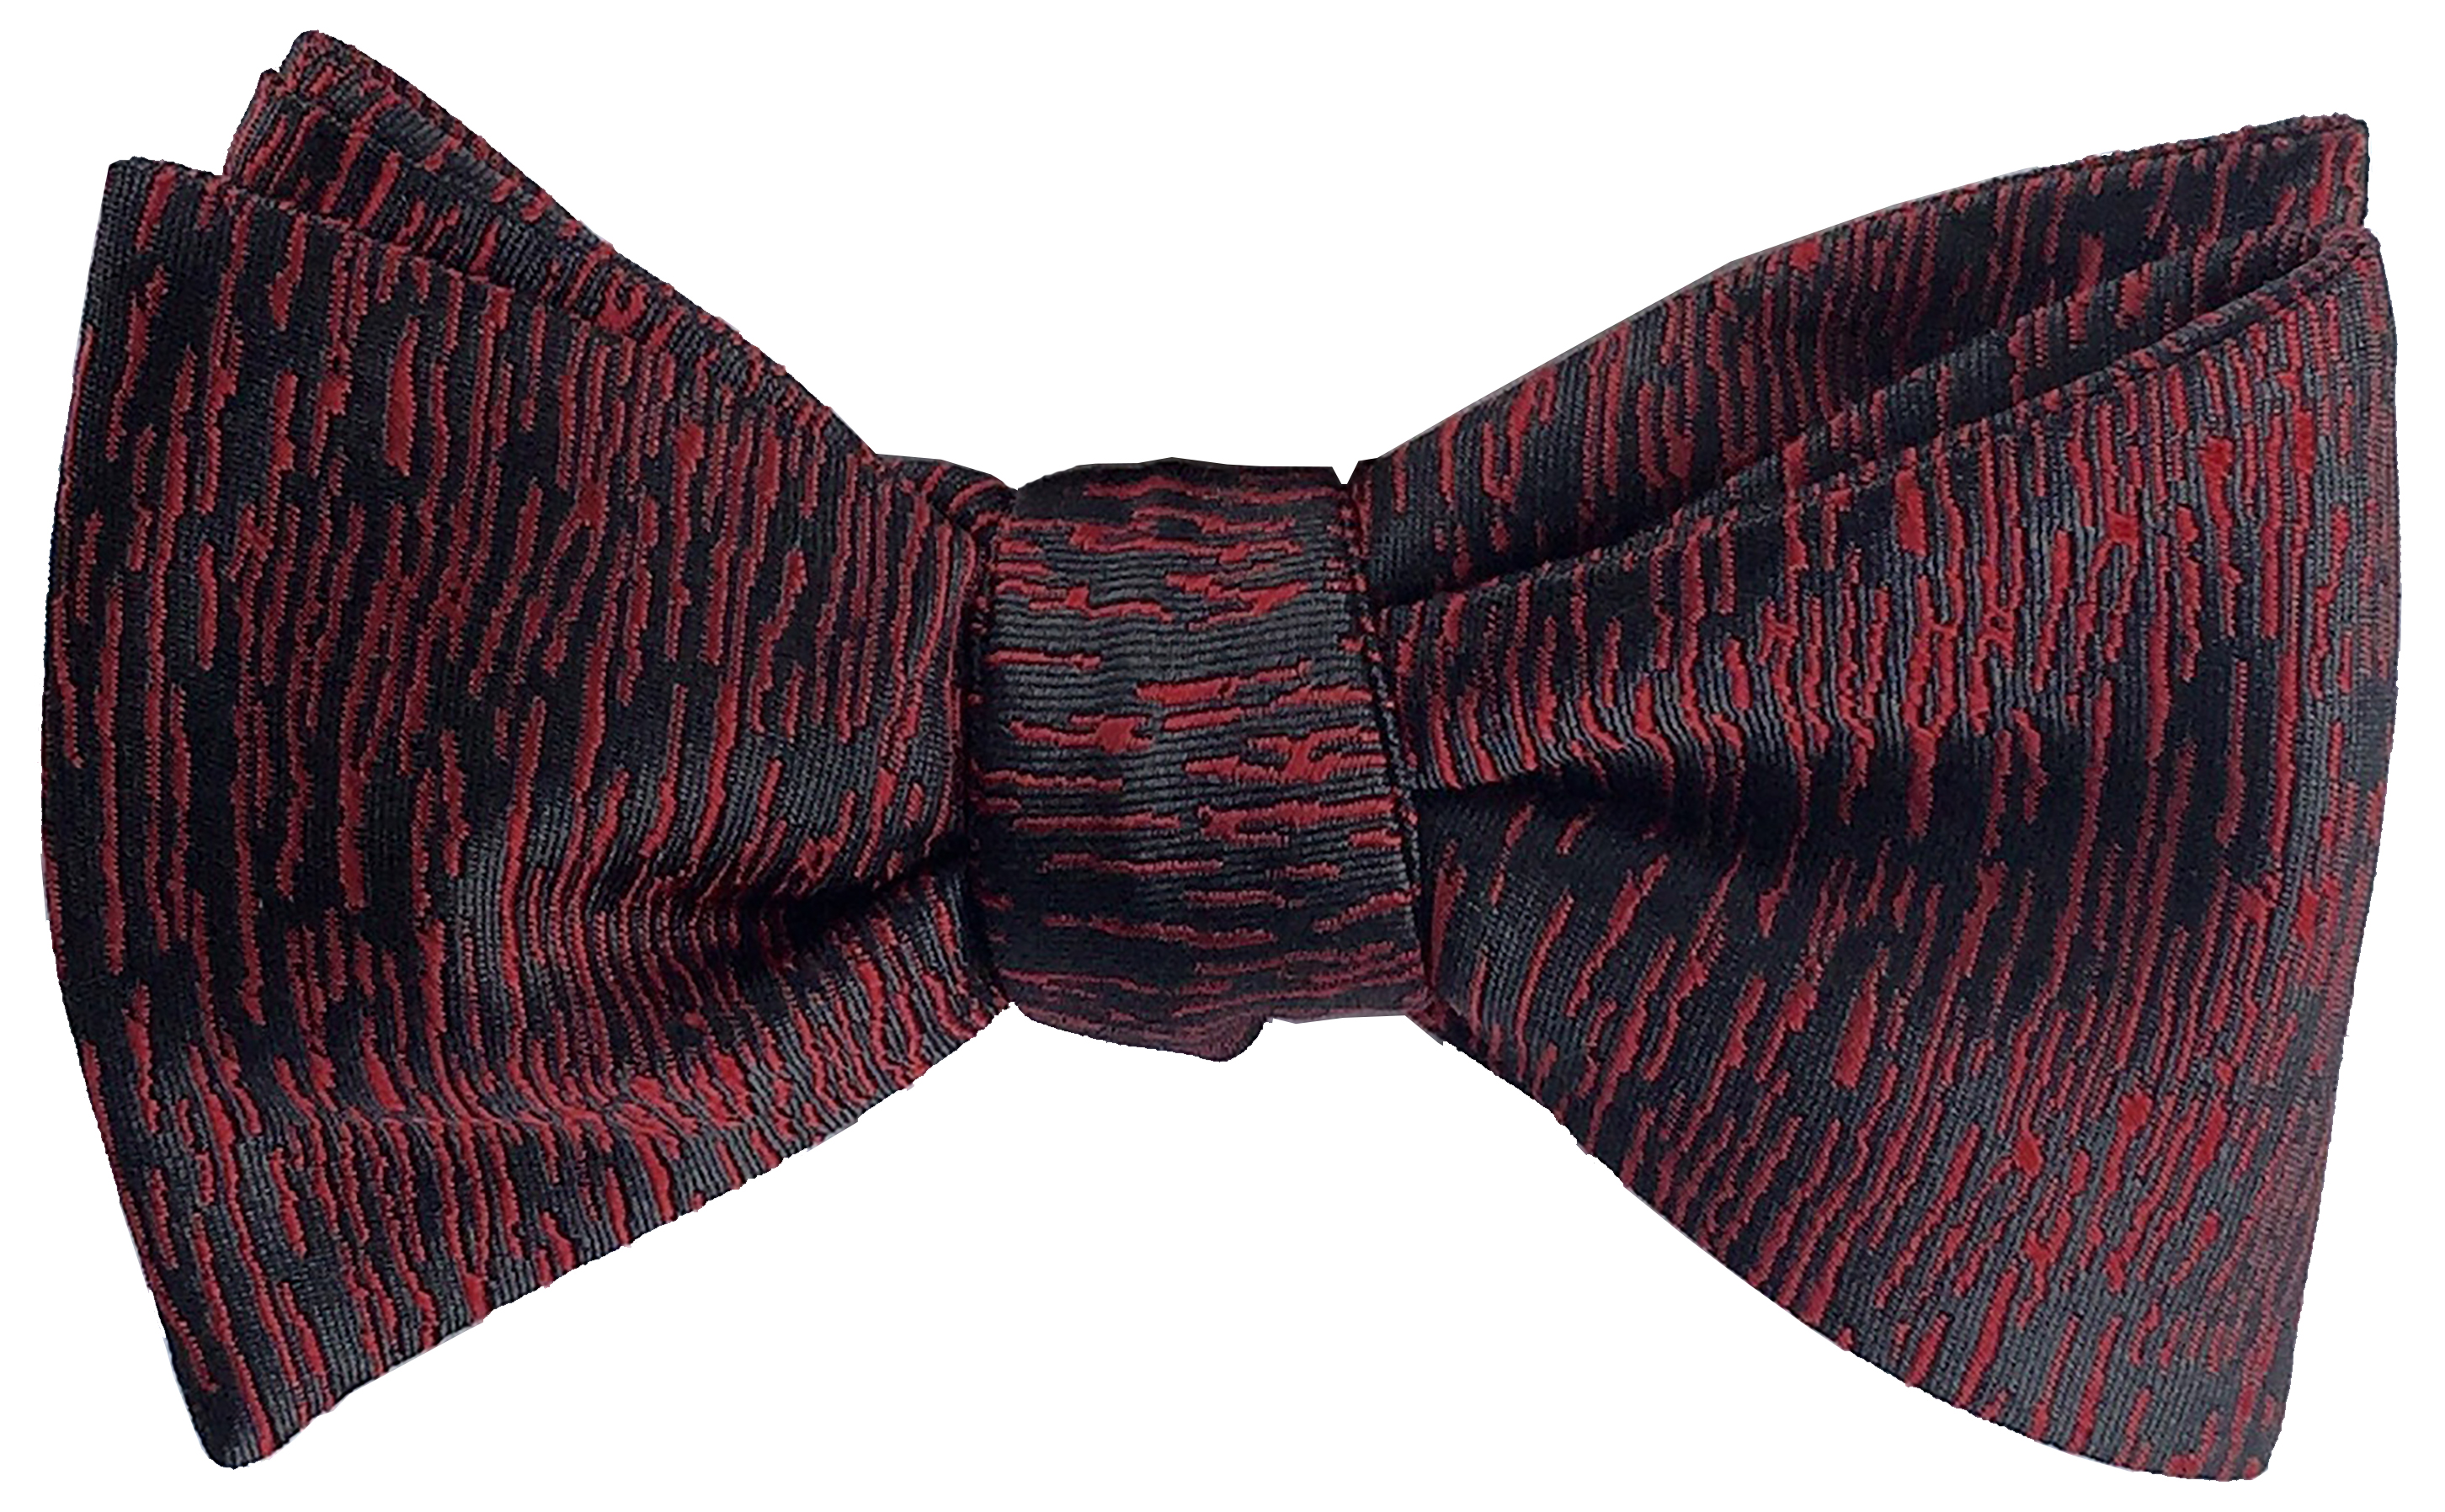 Atlantic Midnight bow tie in ruby